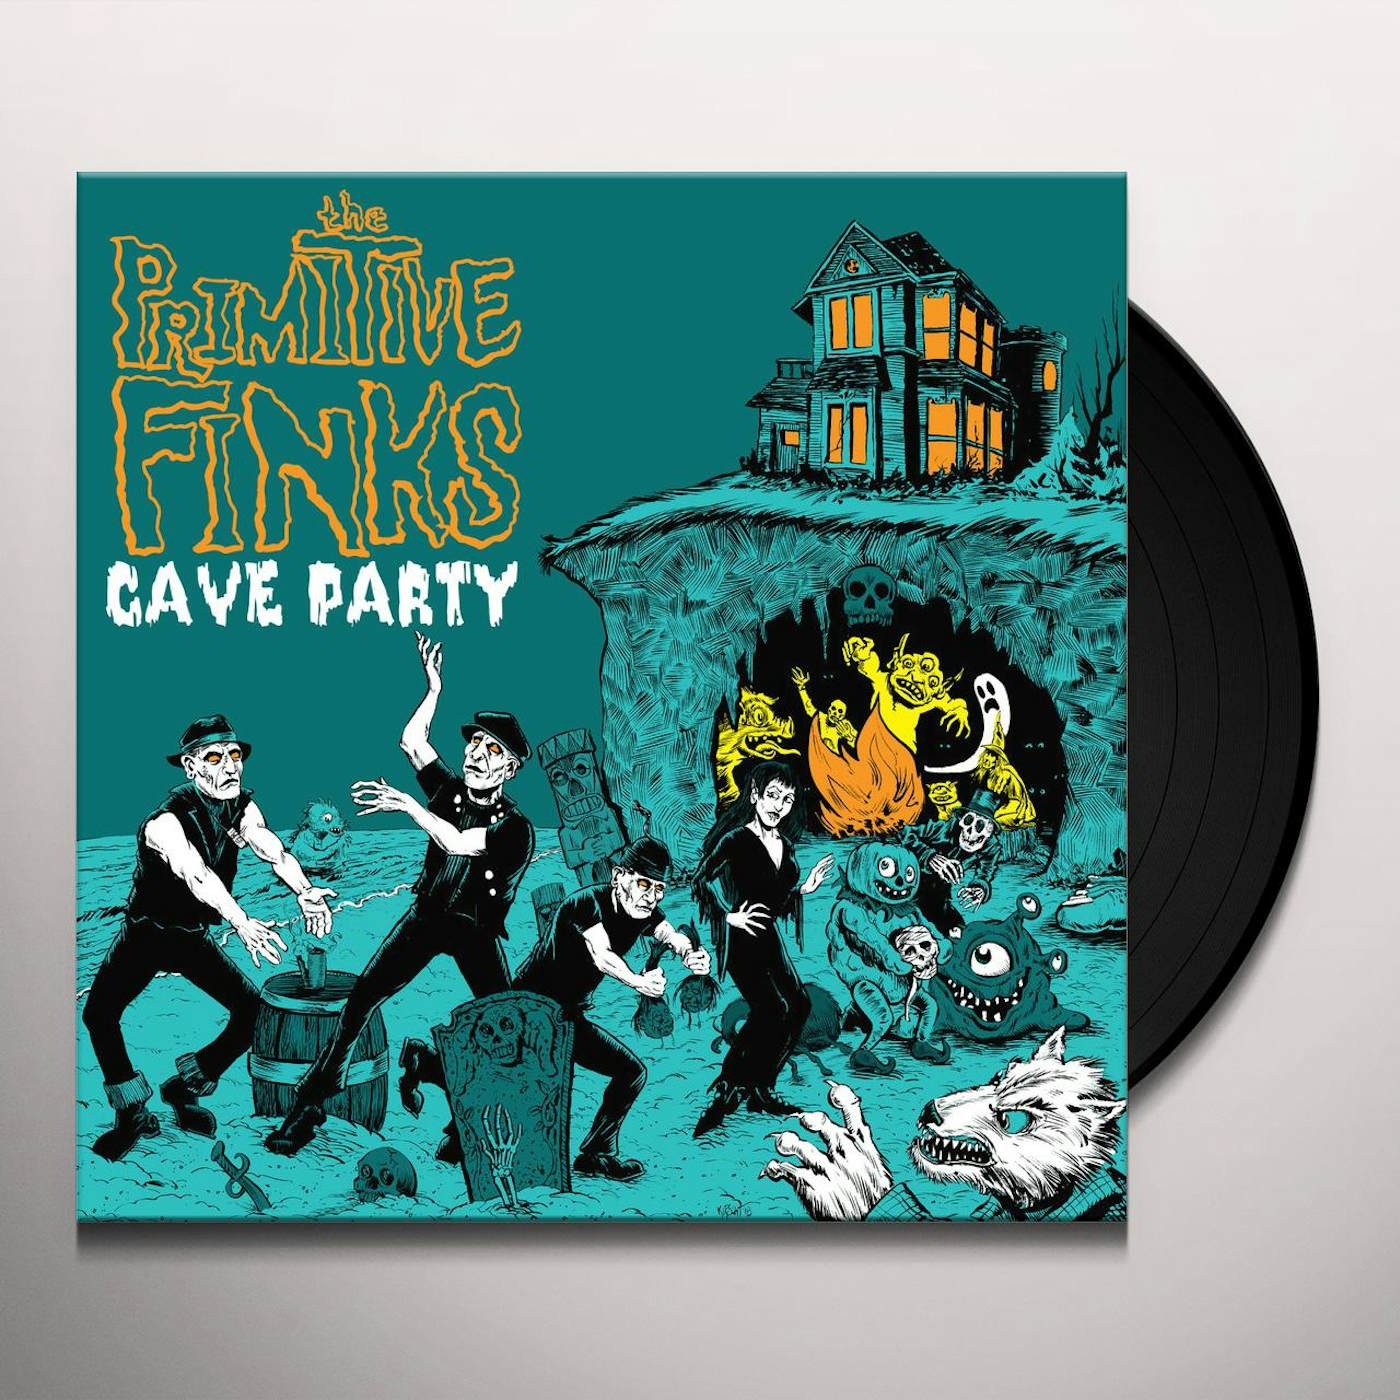 The Primitive Finks Cave Party Vinyl Record